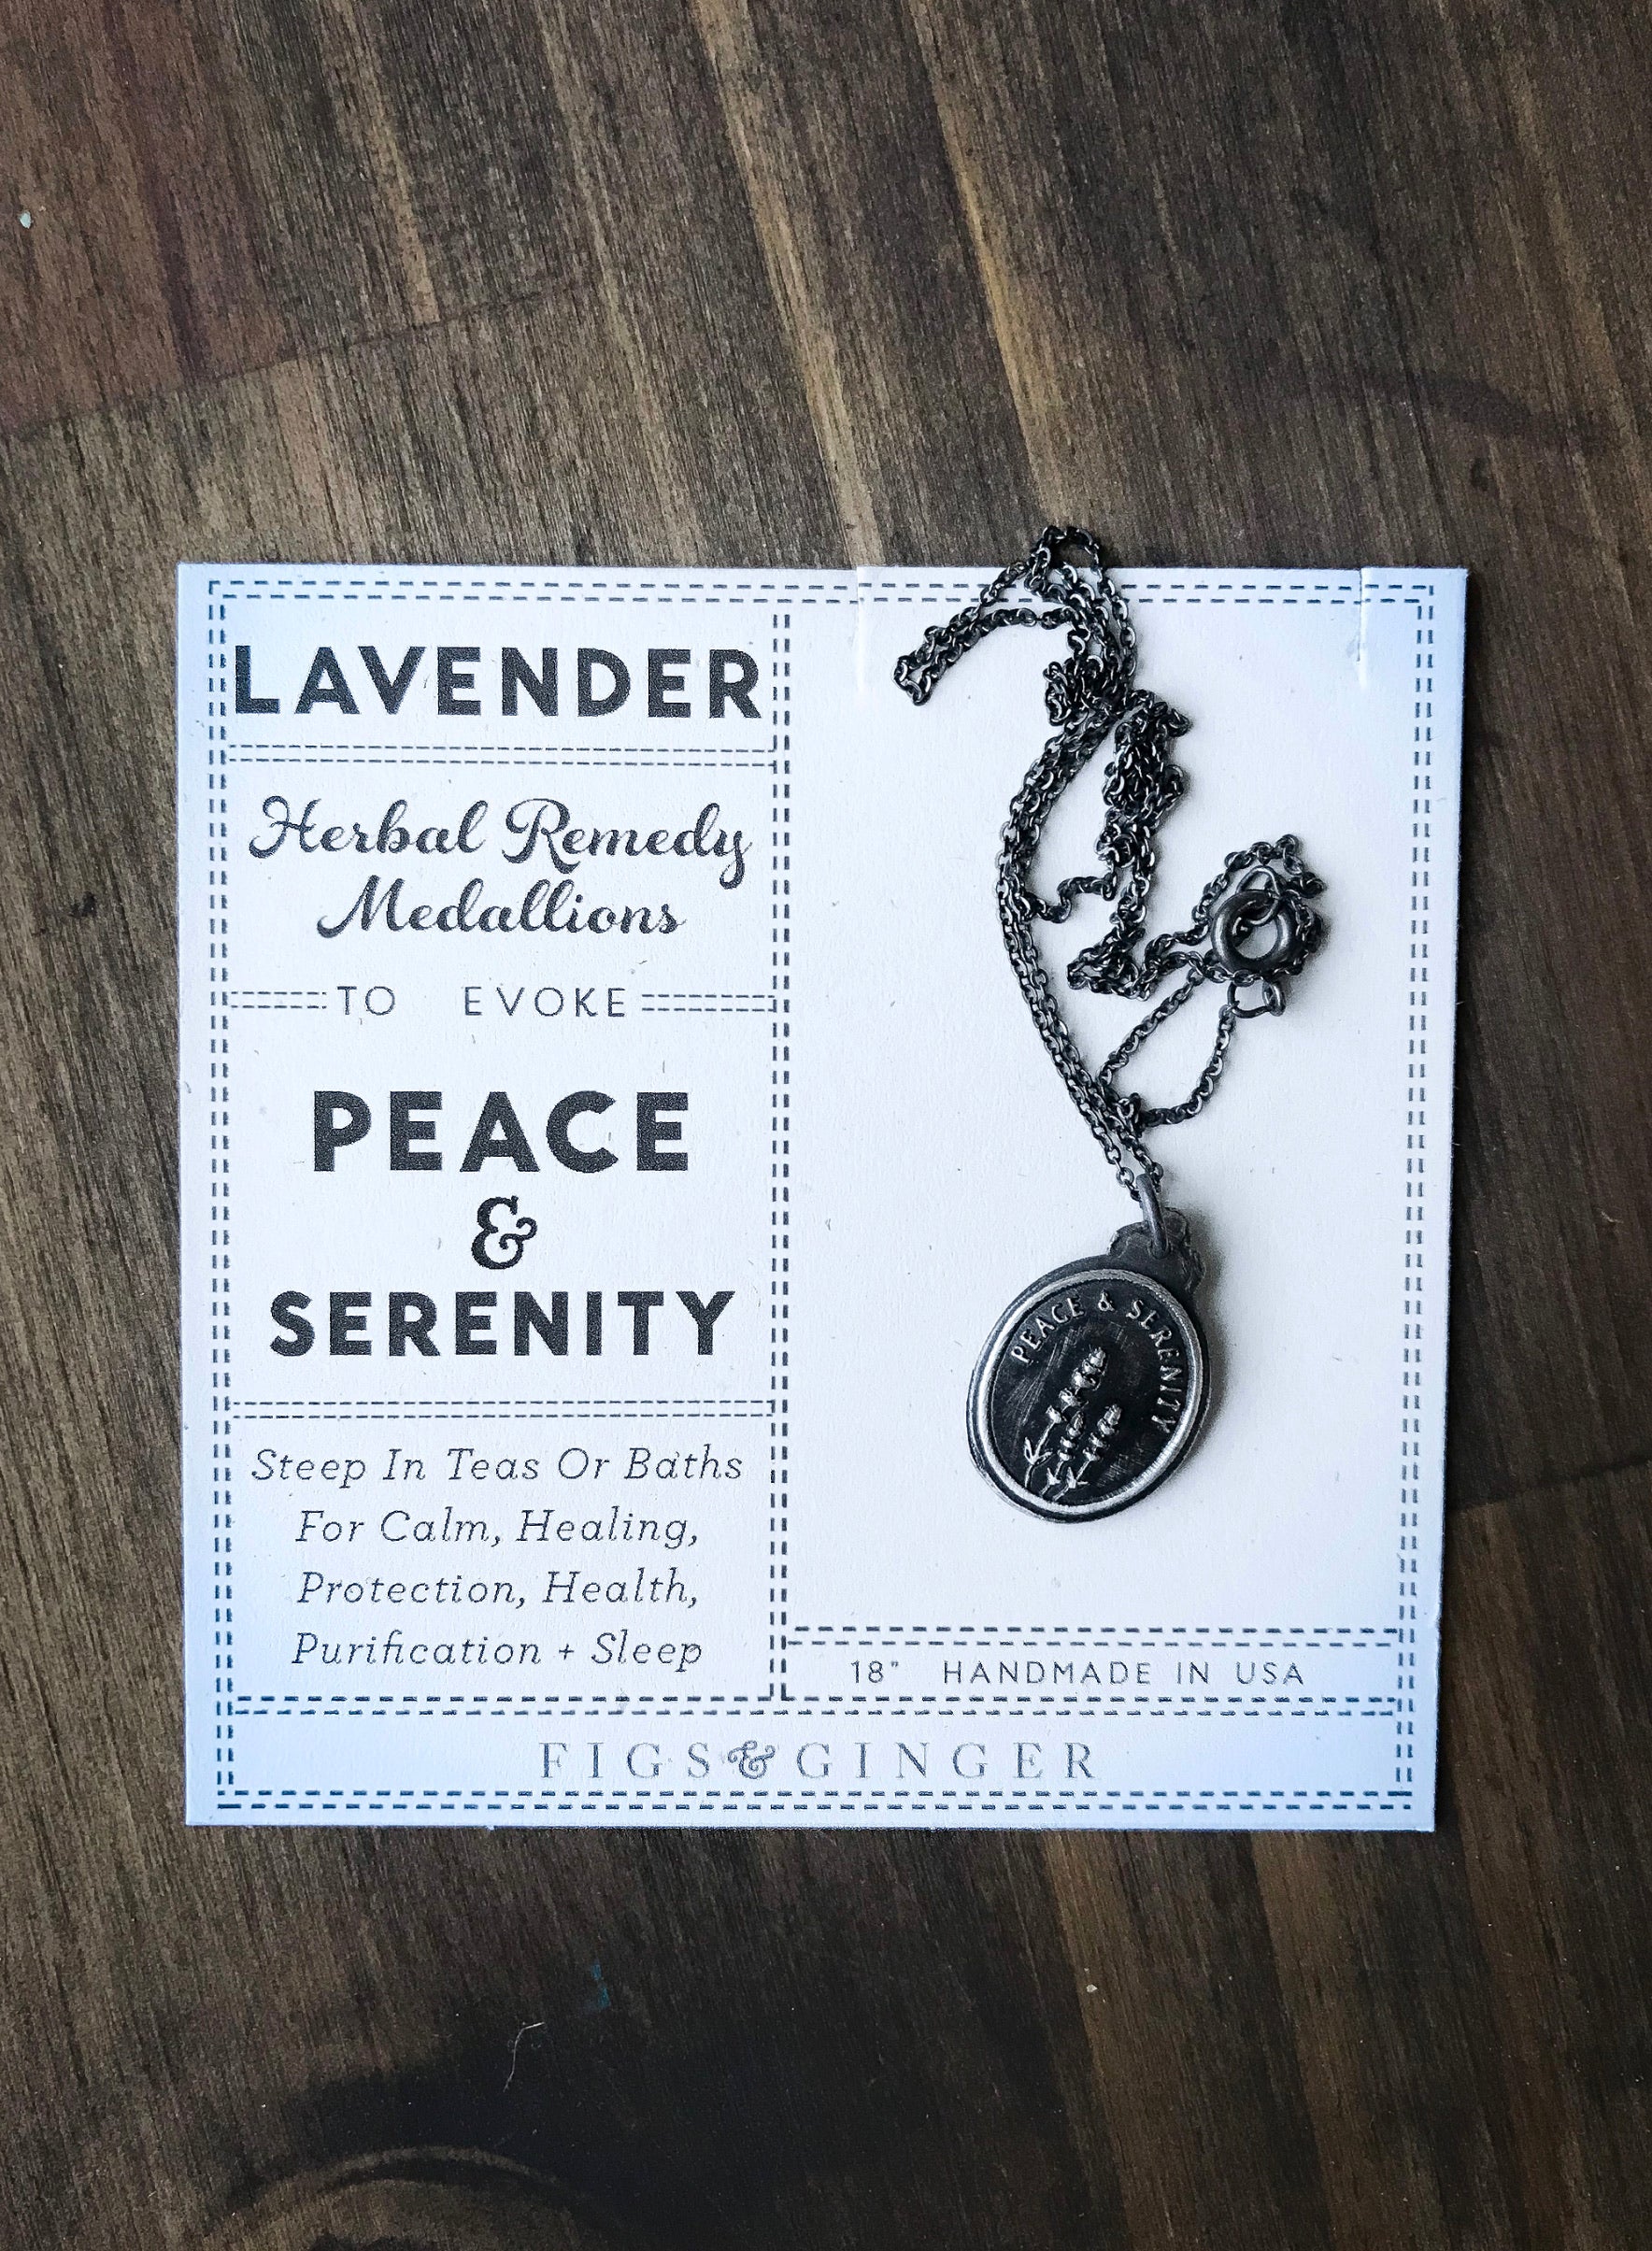 Lavender Herbal Remedy Medallions